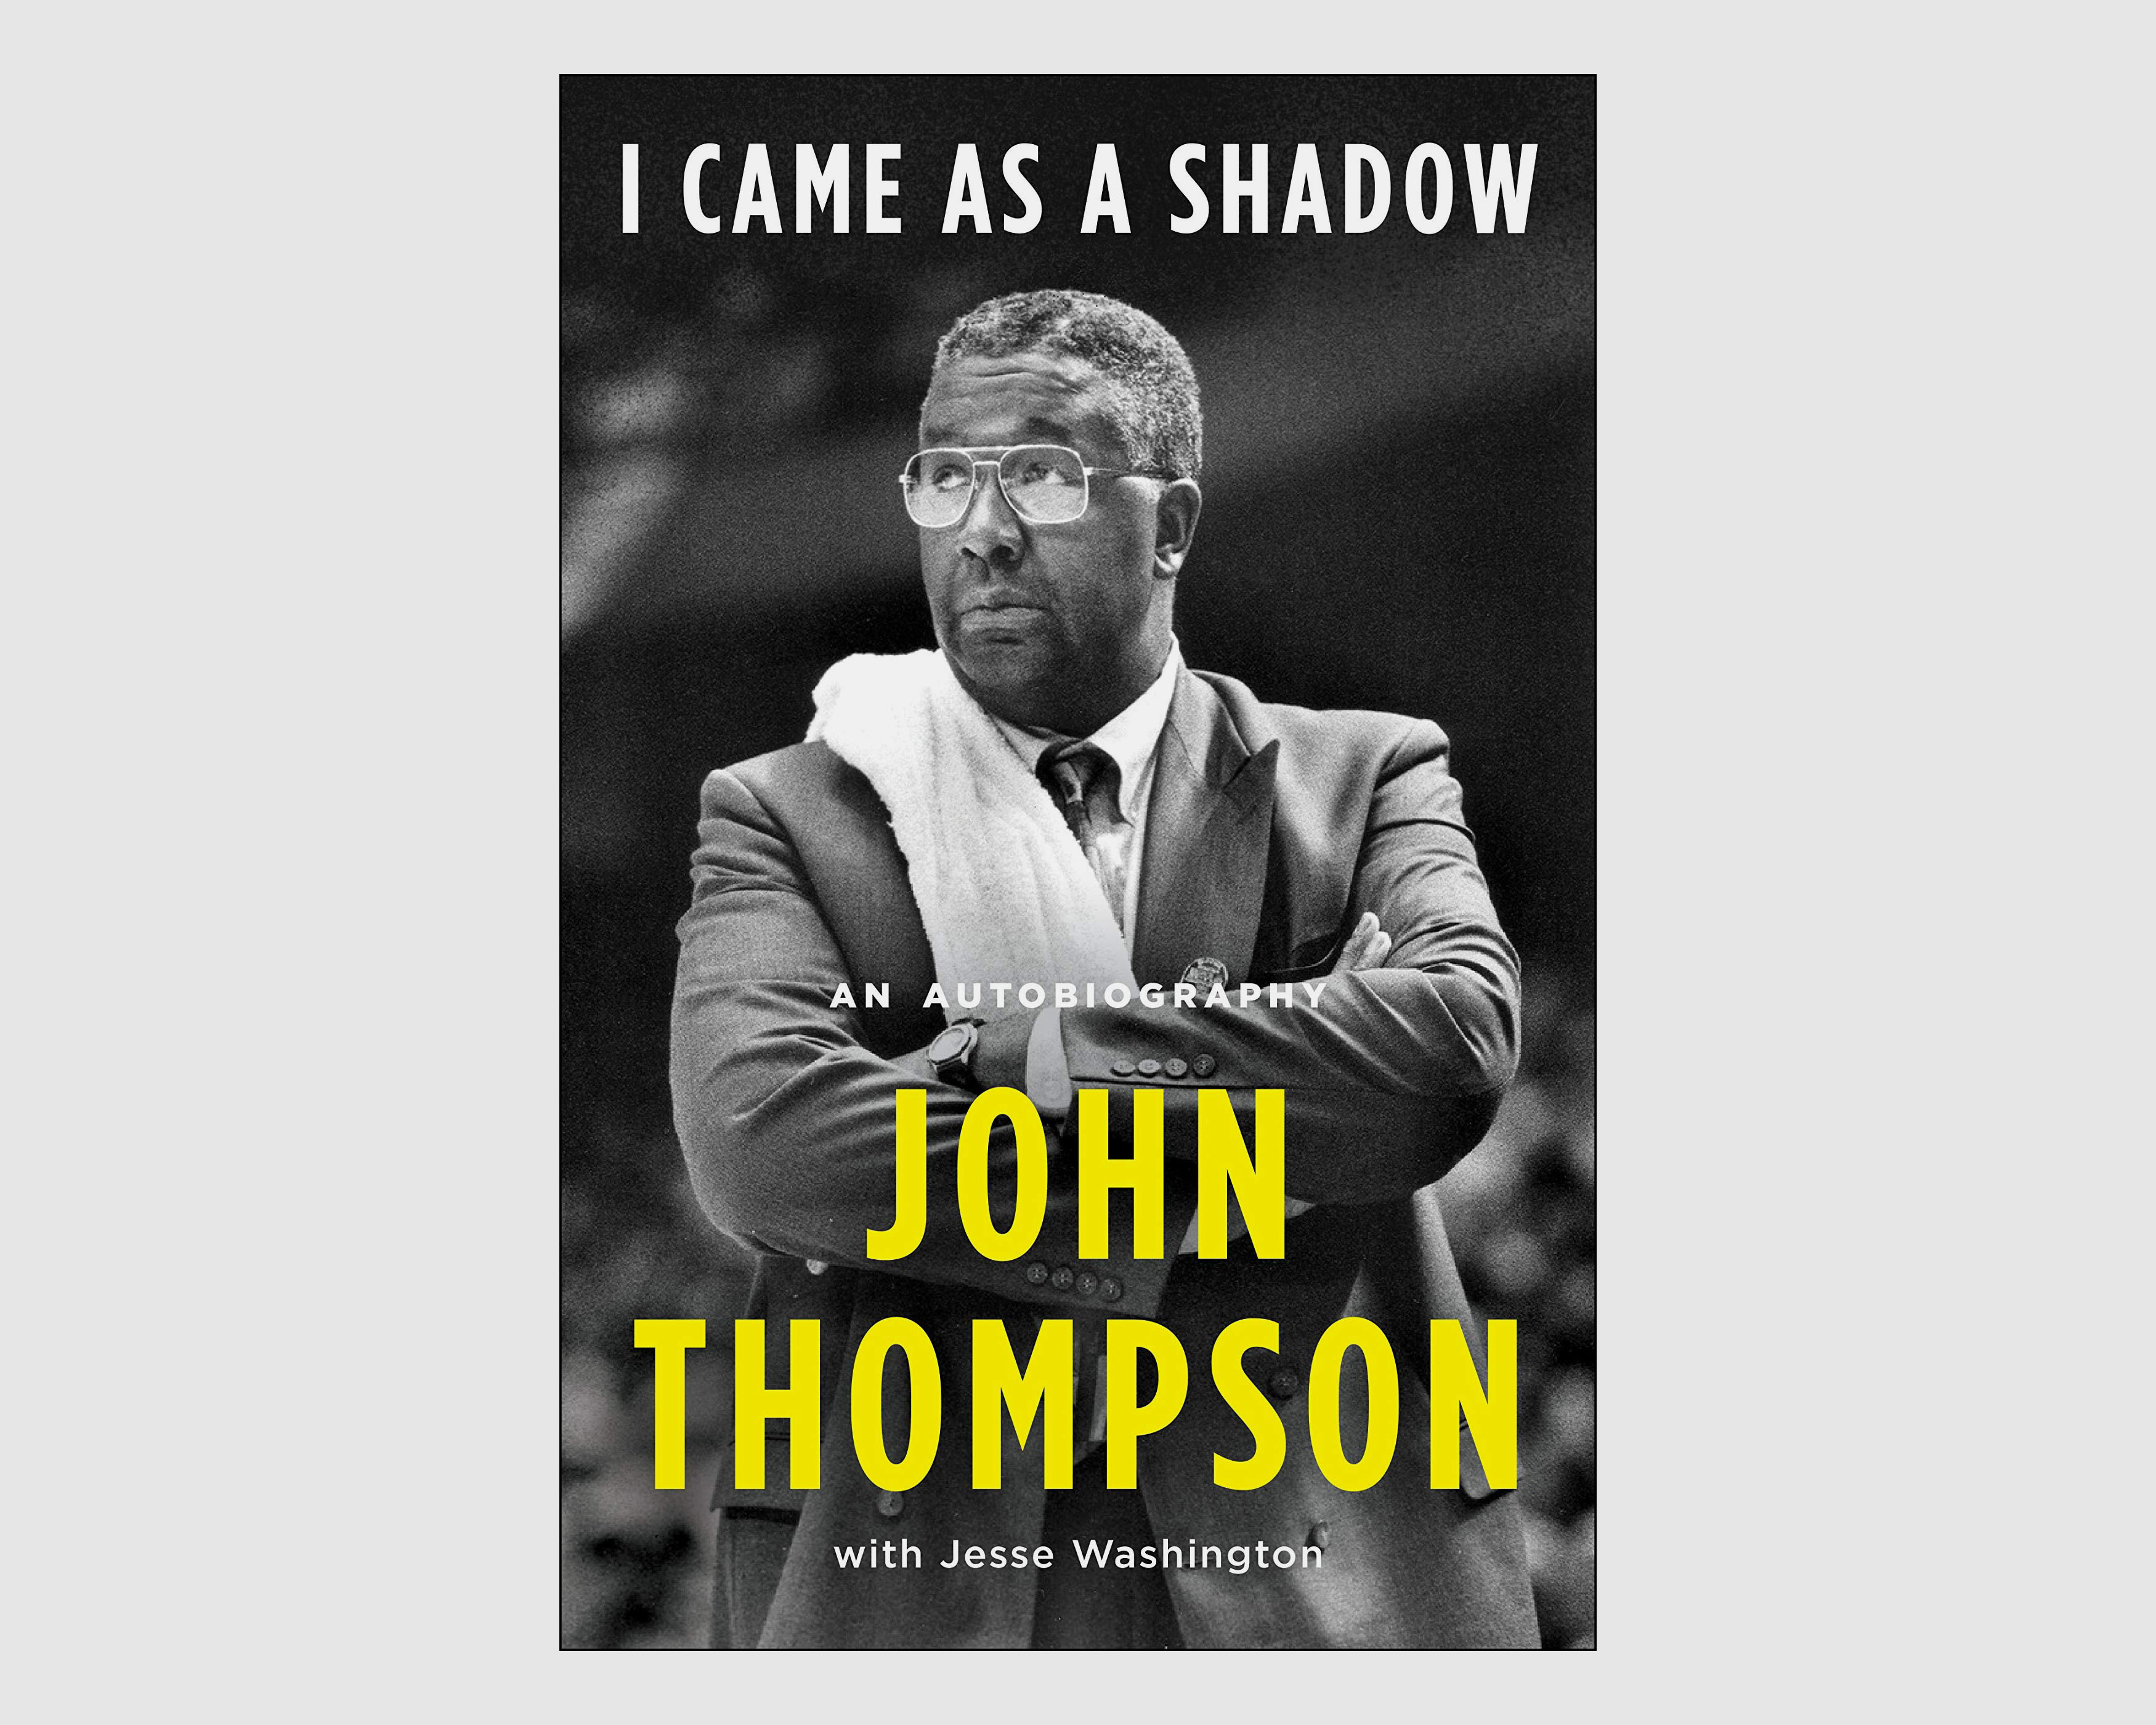 John Thompson's autobiography